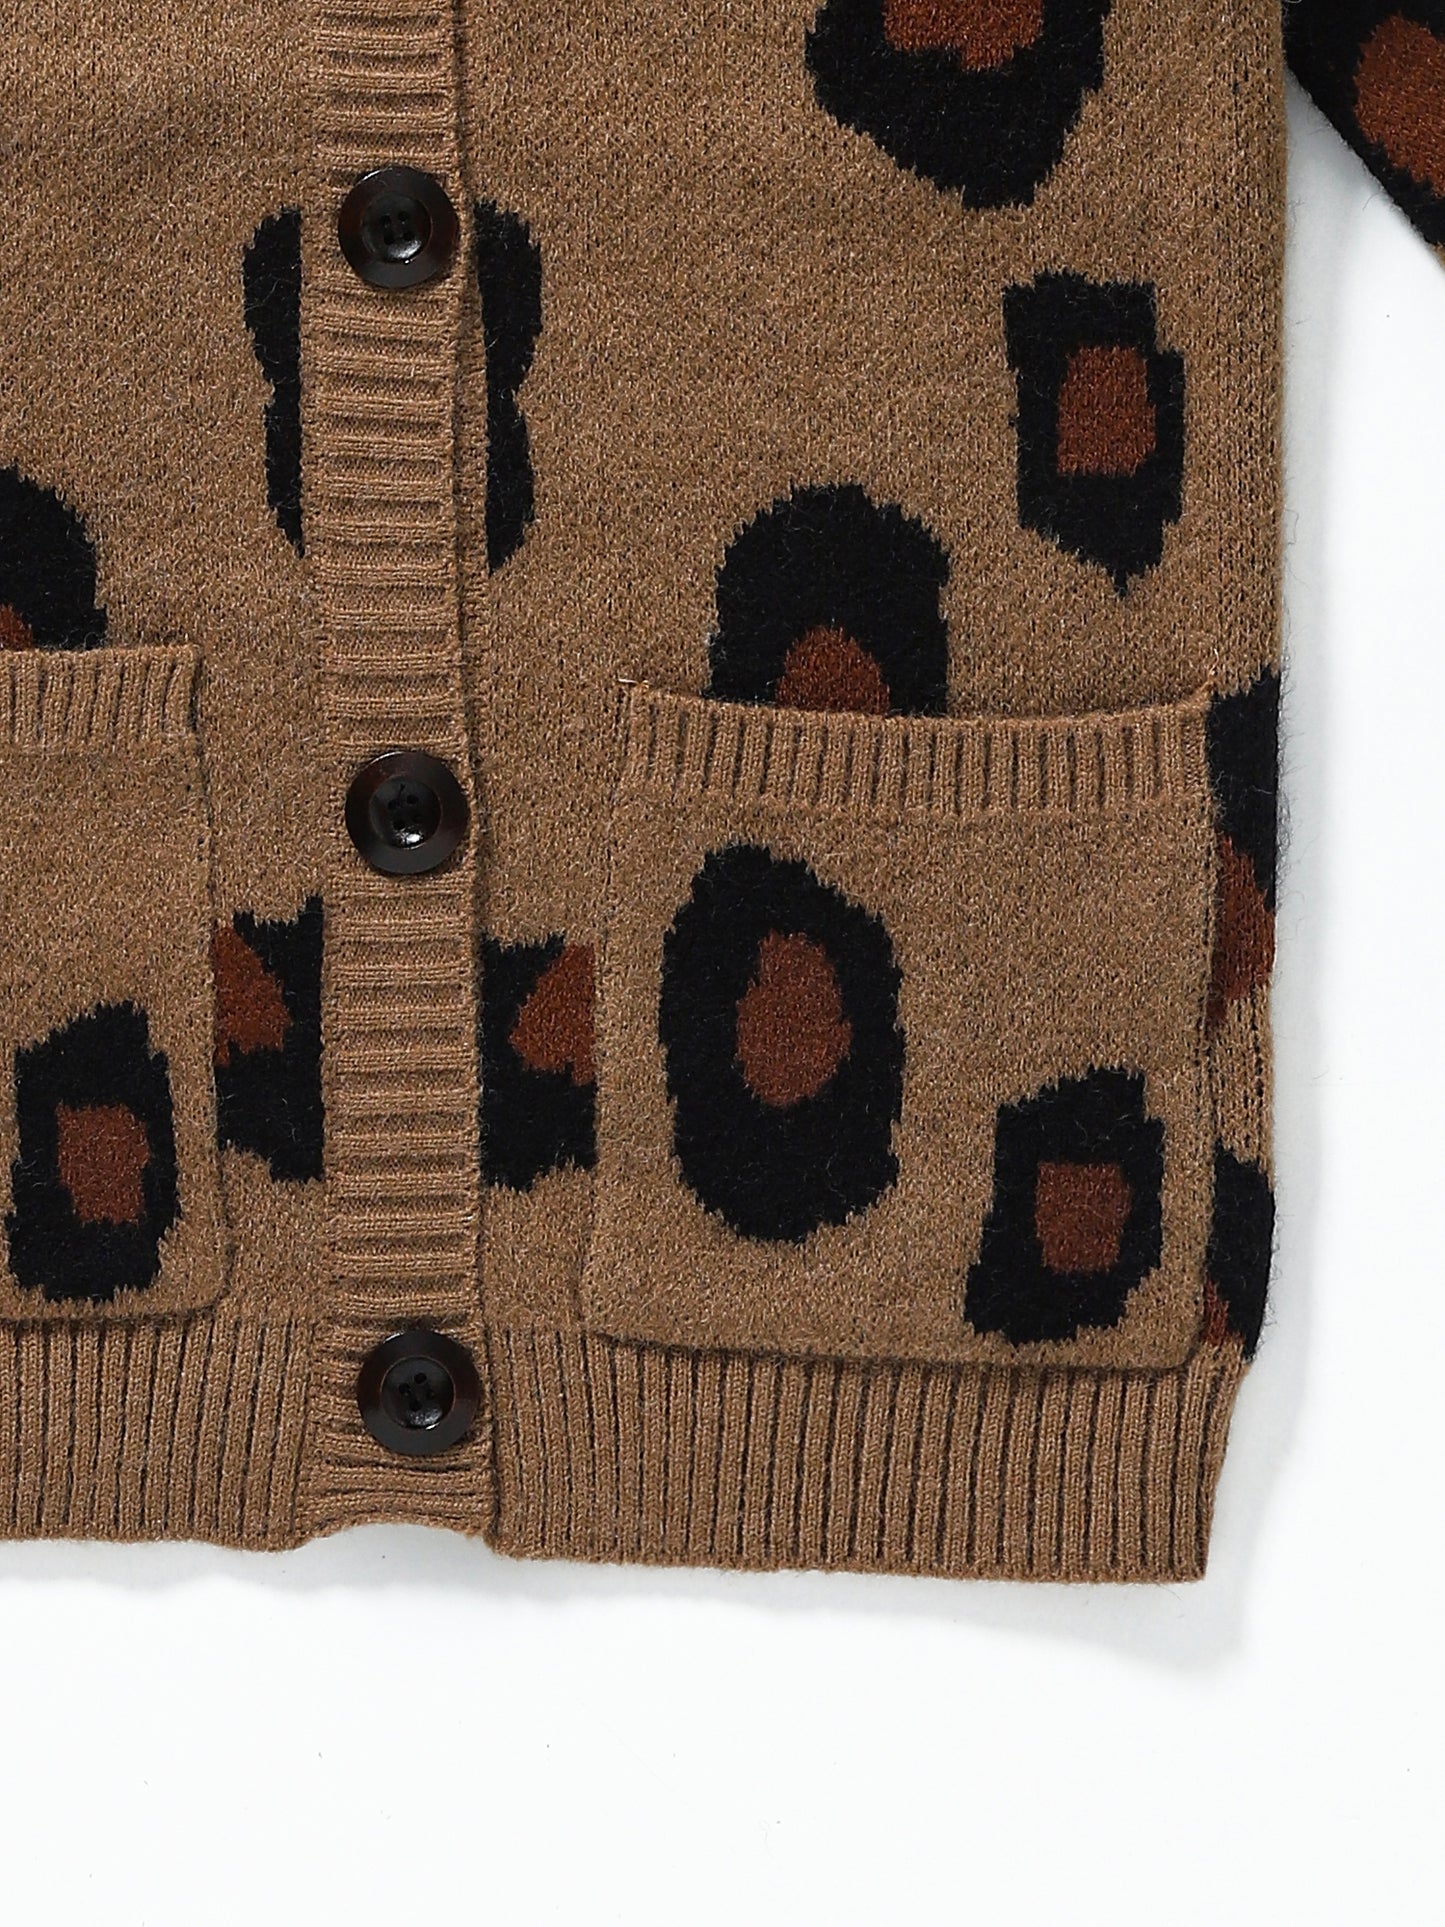 Girls Brown Cheetah Cardigan Sweater